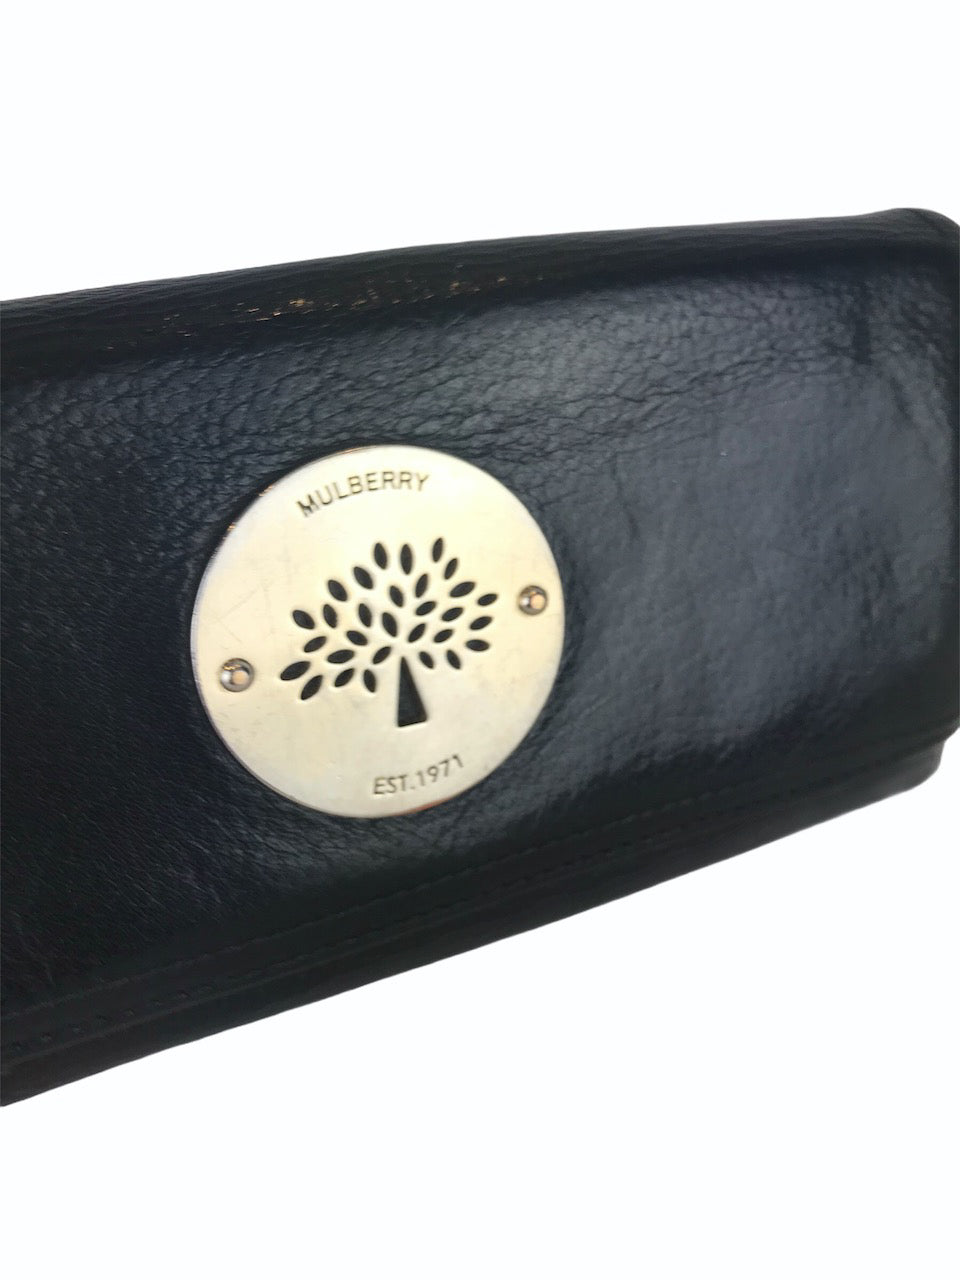 Mulberry Black Leather Wallet  - As Seen On Instagram 09/09/2020 - Siopaella Designer Exchange